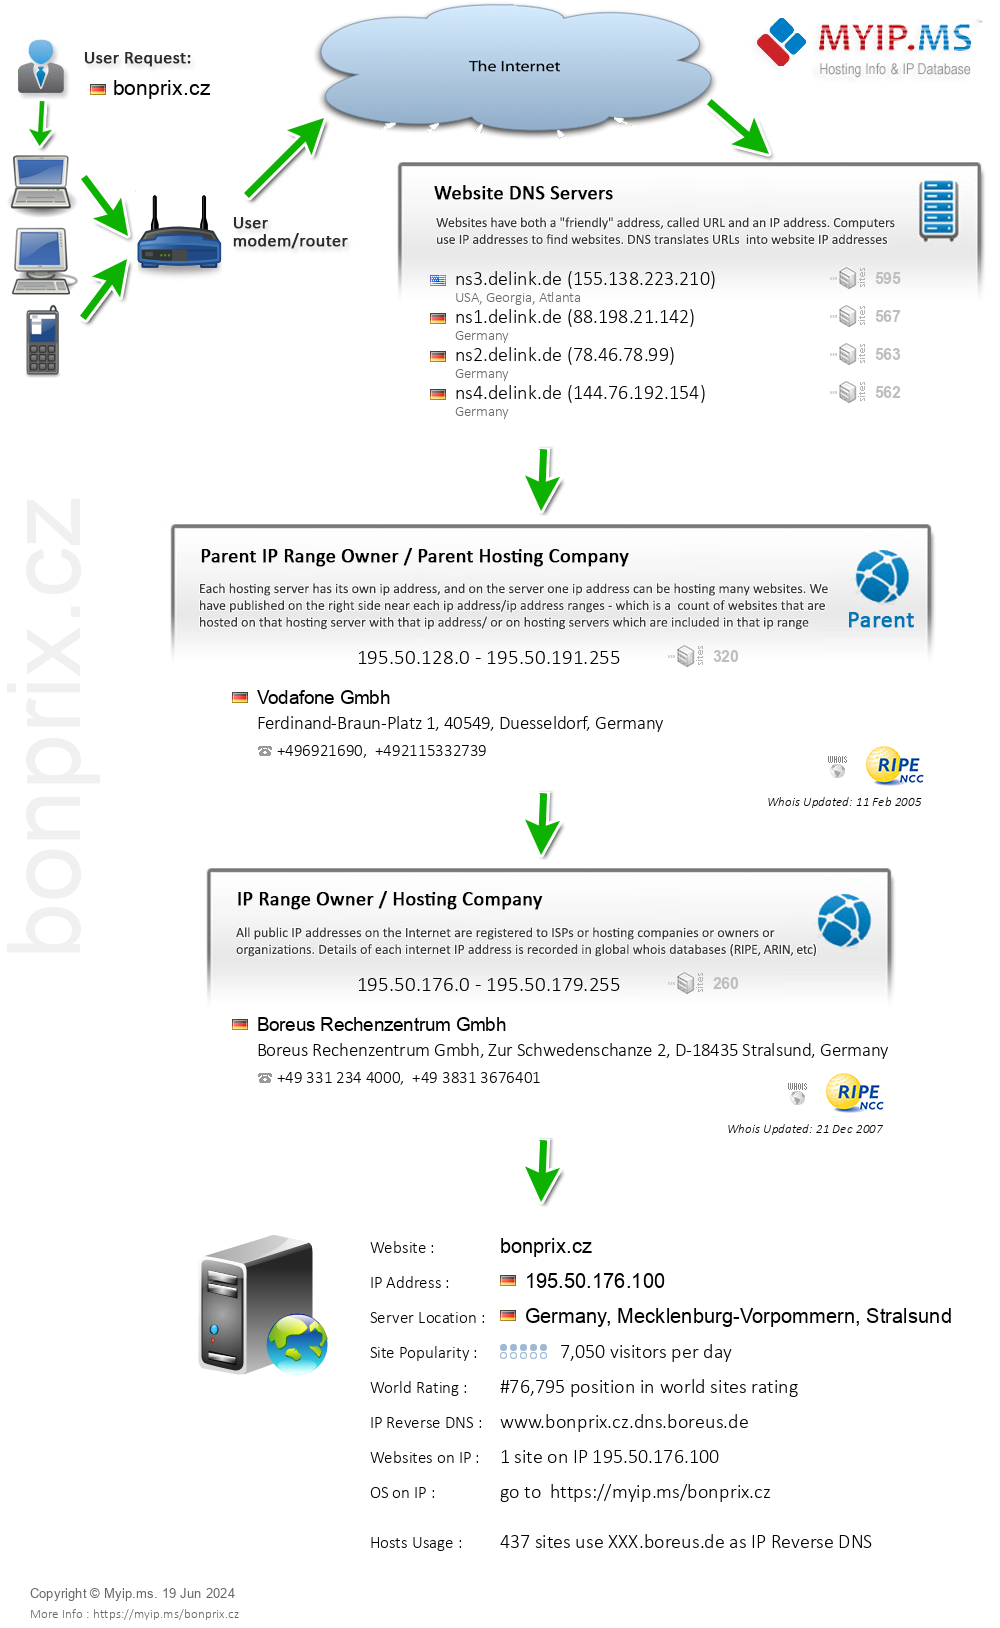 Bonprix.cz - Website Hosting Visual IP Diagram